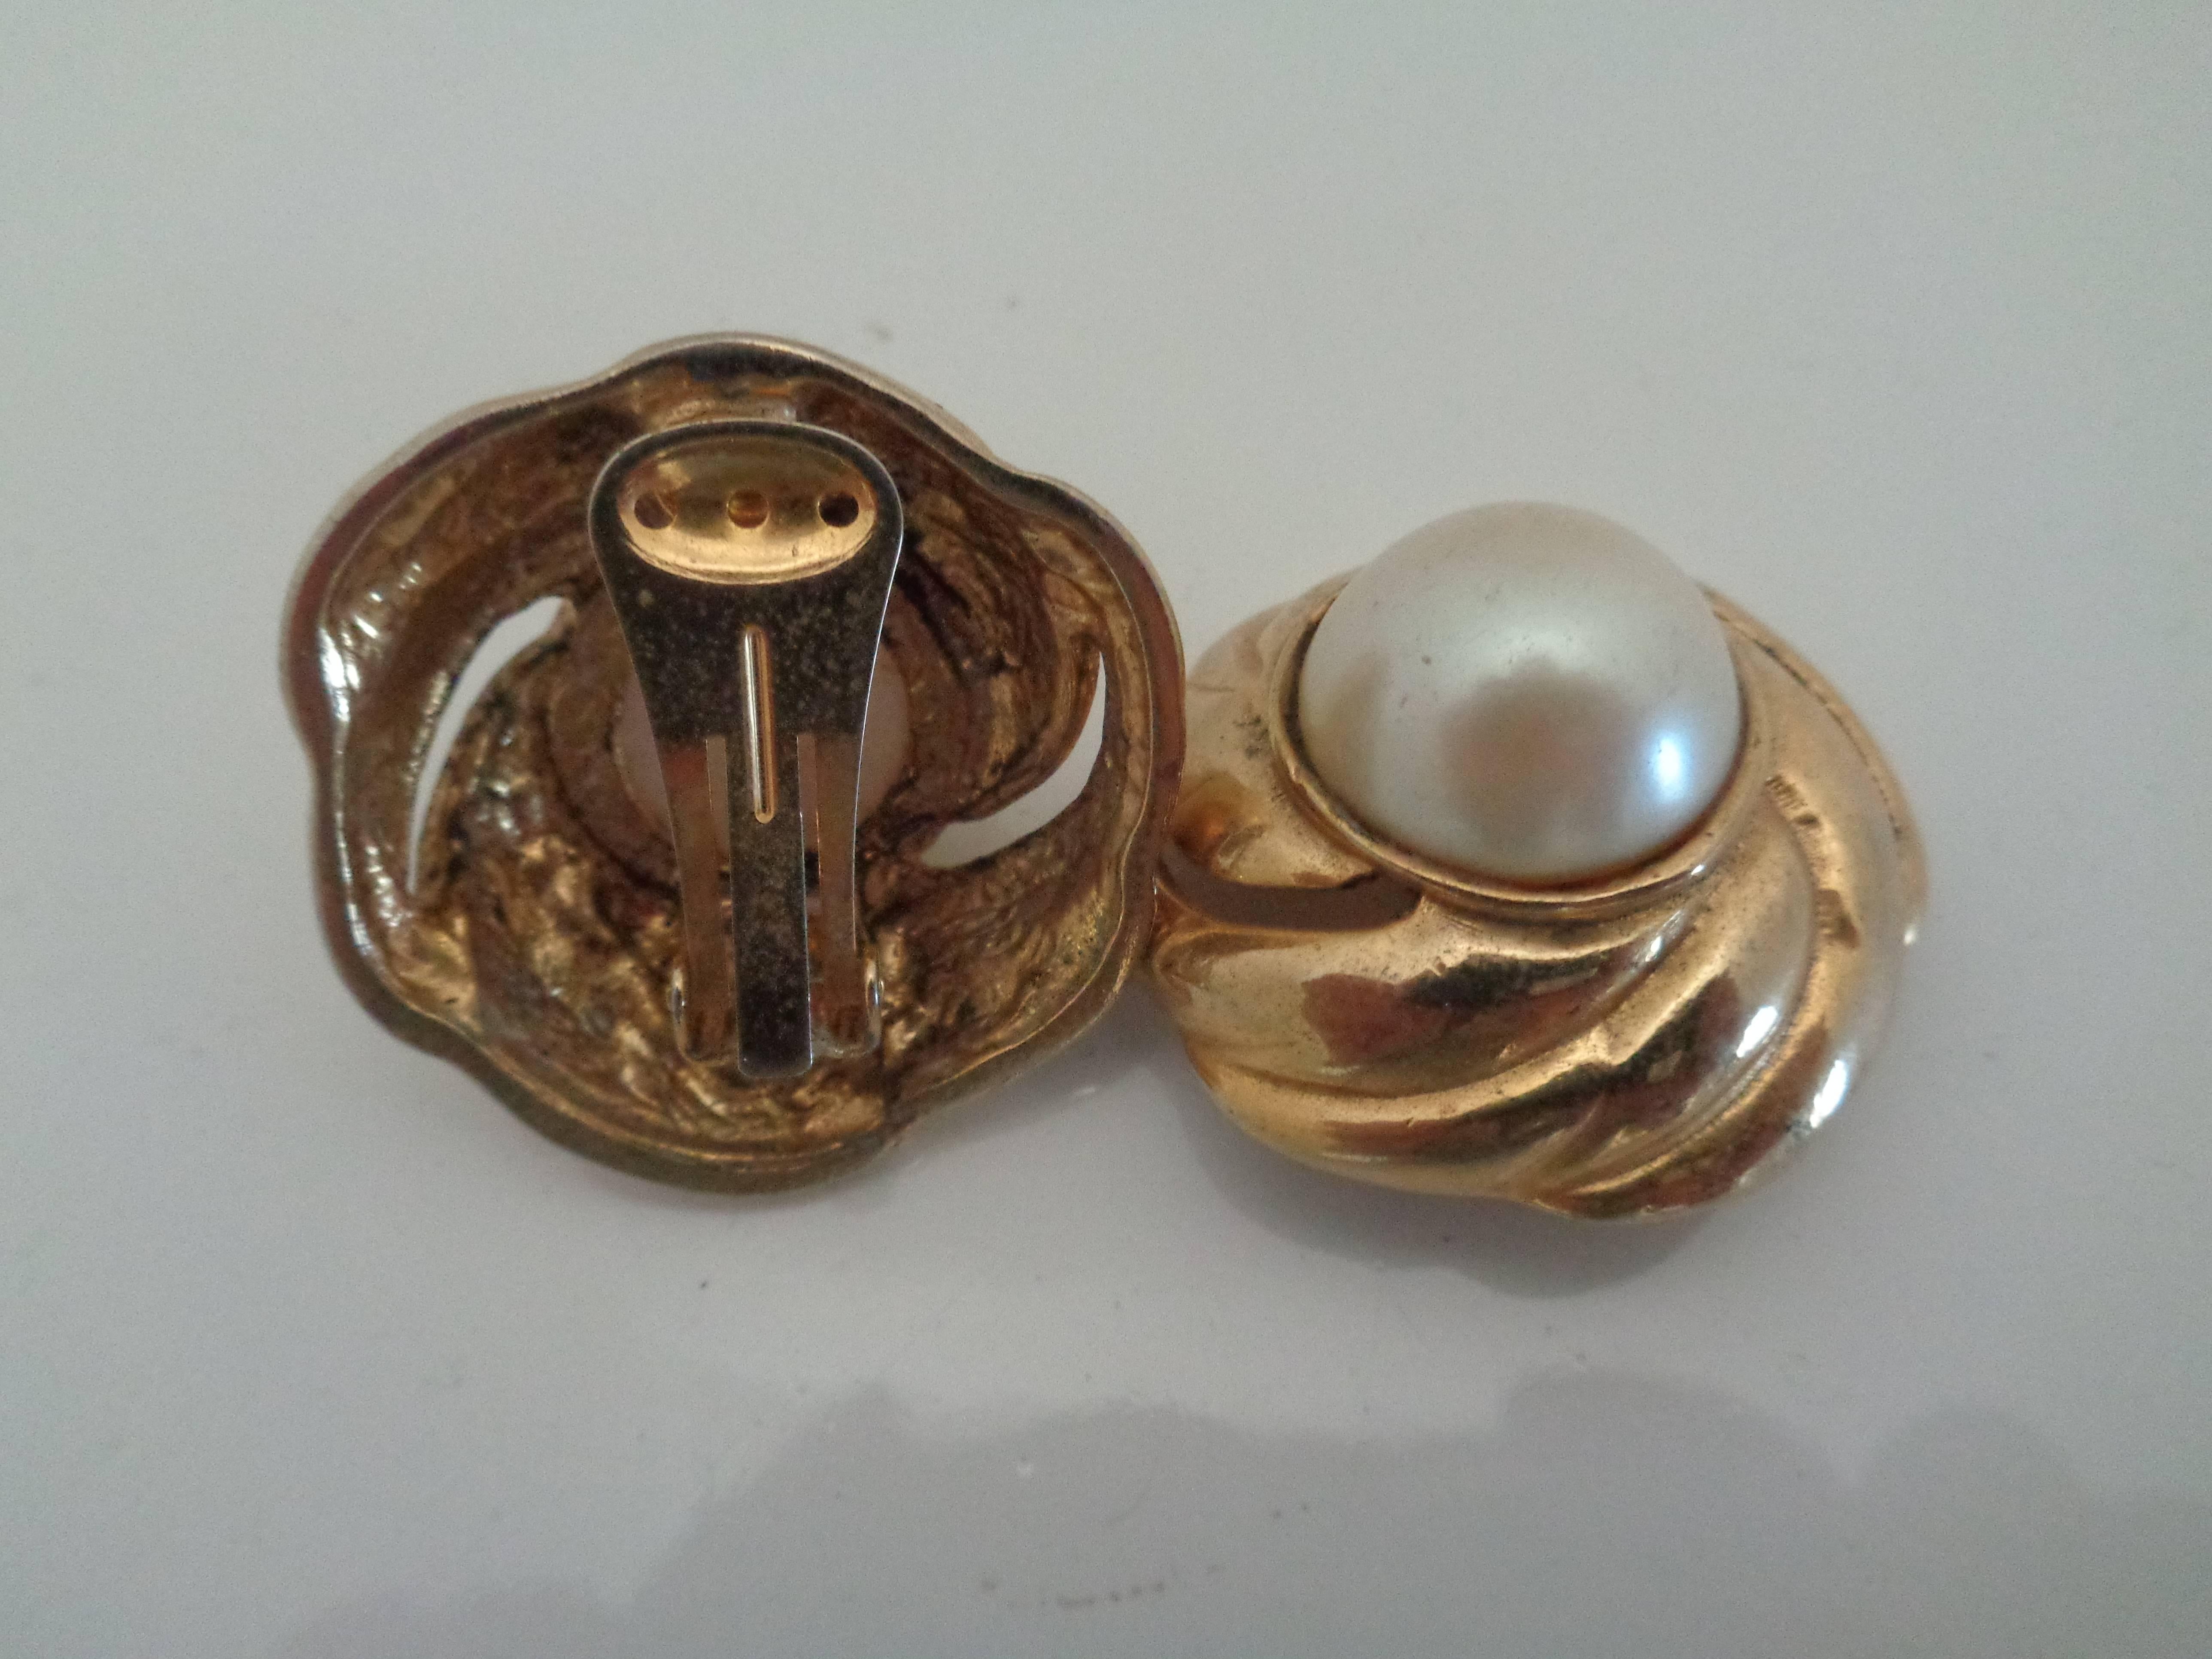 1990s Gold Tone Faux Pearls Clip on earrings

measurements: 3.5 cm x 3.5 cm